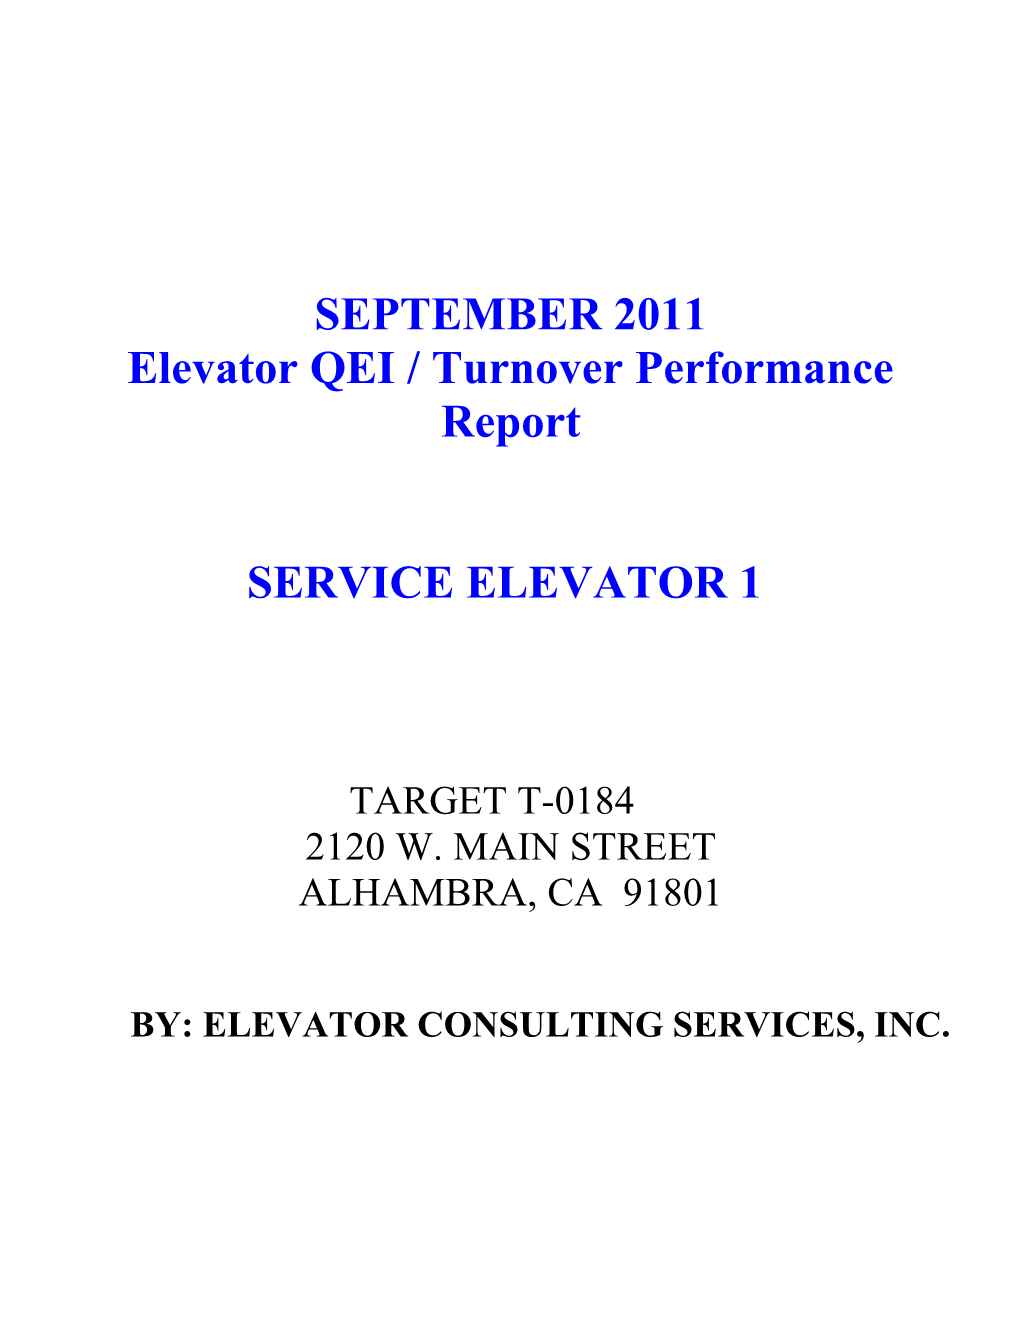 Elevator QEI / Turnover Performance Report